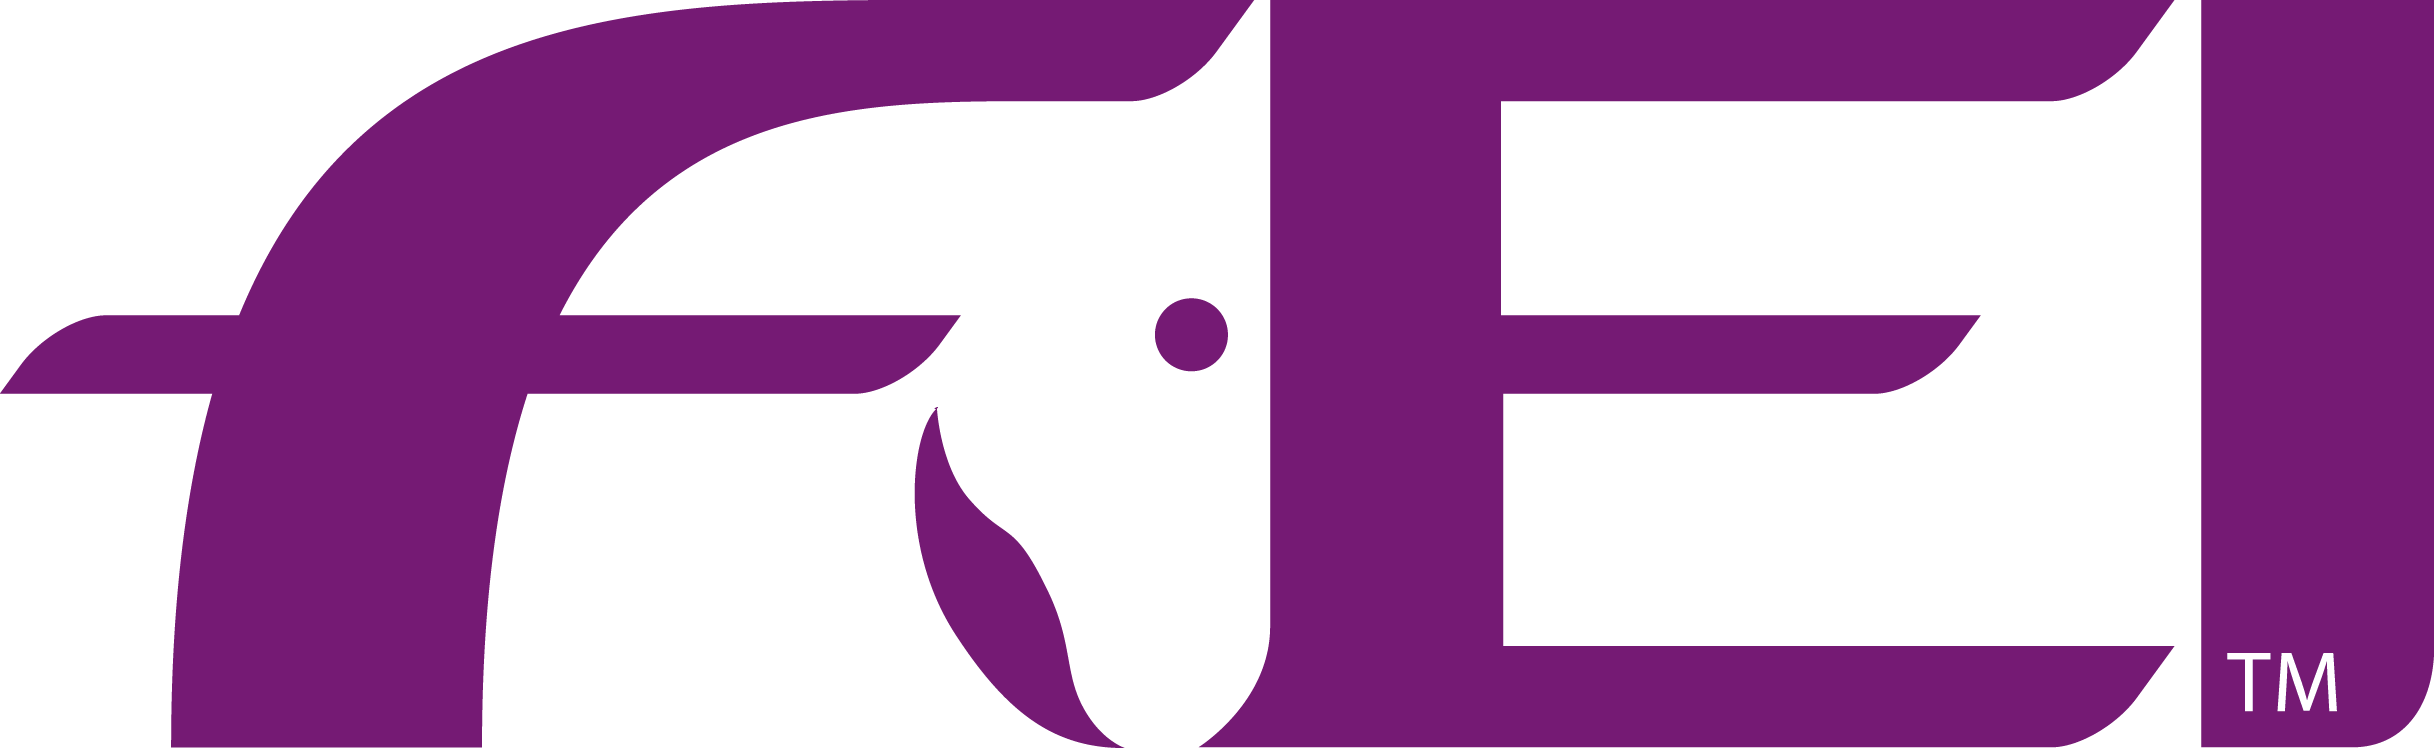 Fei Logo - Fédération Équestre Internationale (FEI) Logo [fei.org]. Free